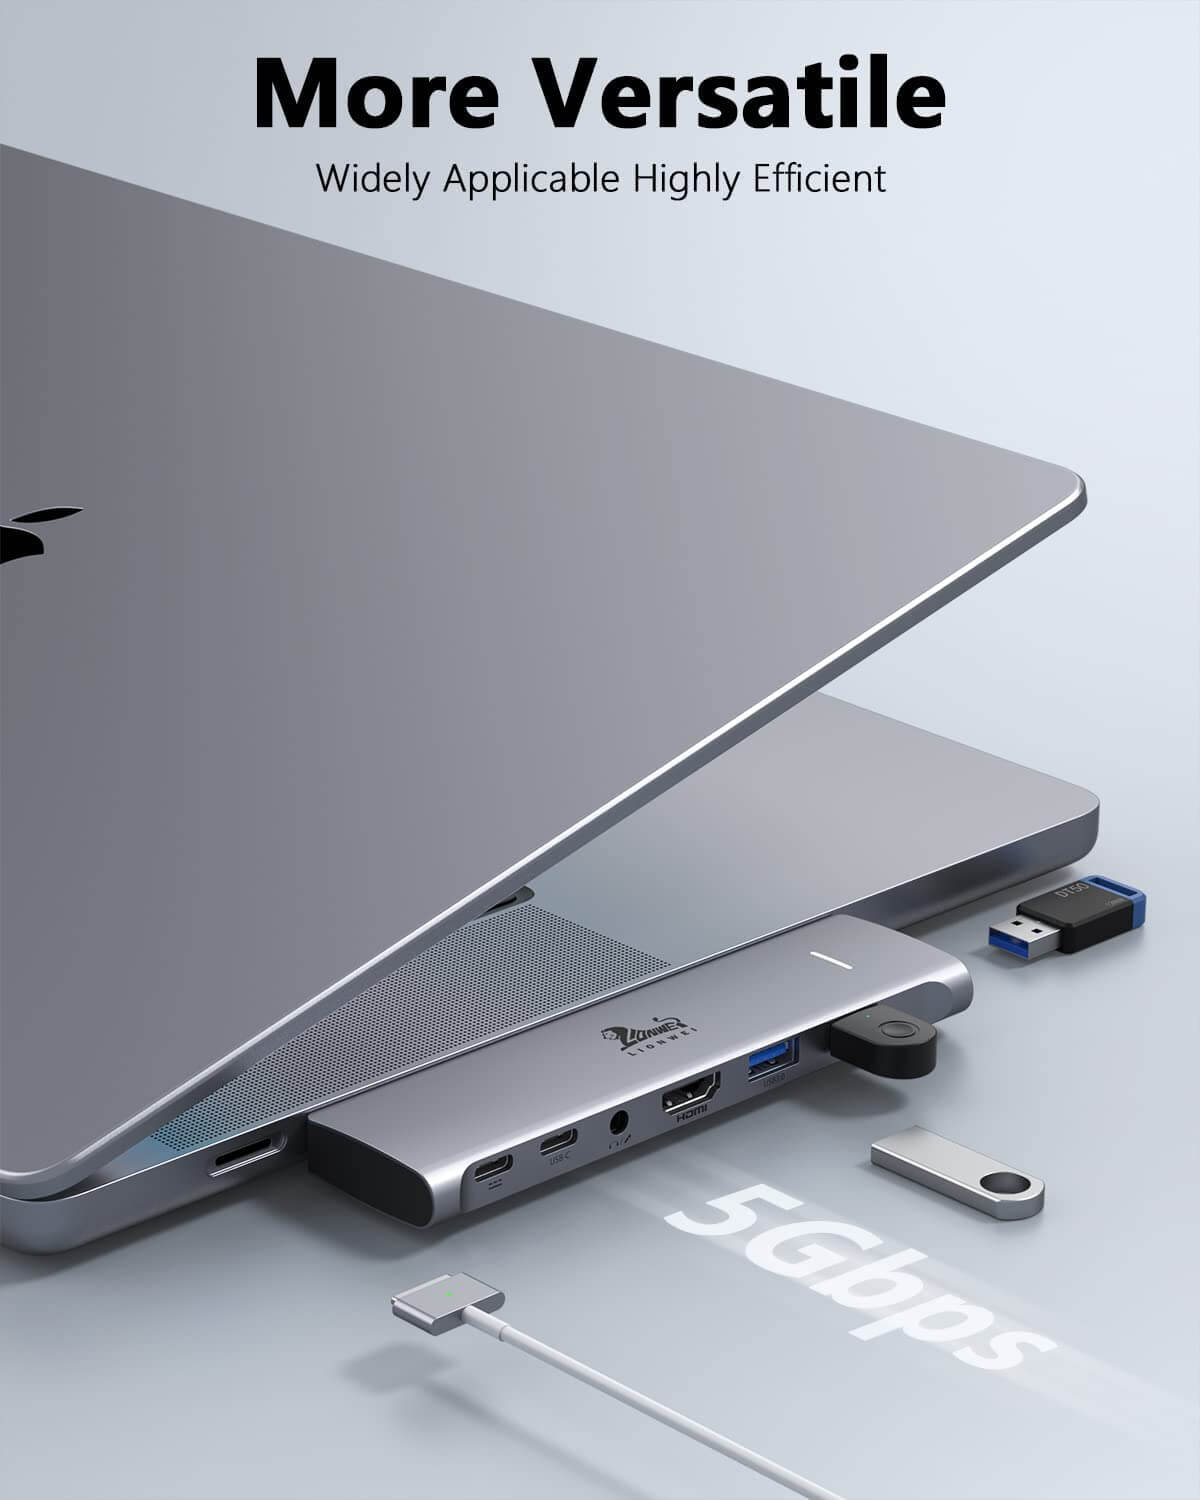 USB C Adapter for MacBook Pro/MacBook Air M1 M2 2021 2020 2019 2018 13 15  16, 6 in 1 USB-C Hub MacBook Pro Accessories with 3 USB 3.0 Ports,USB C